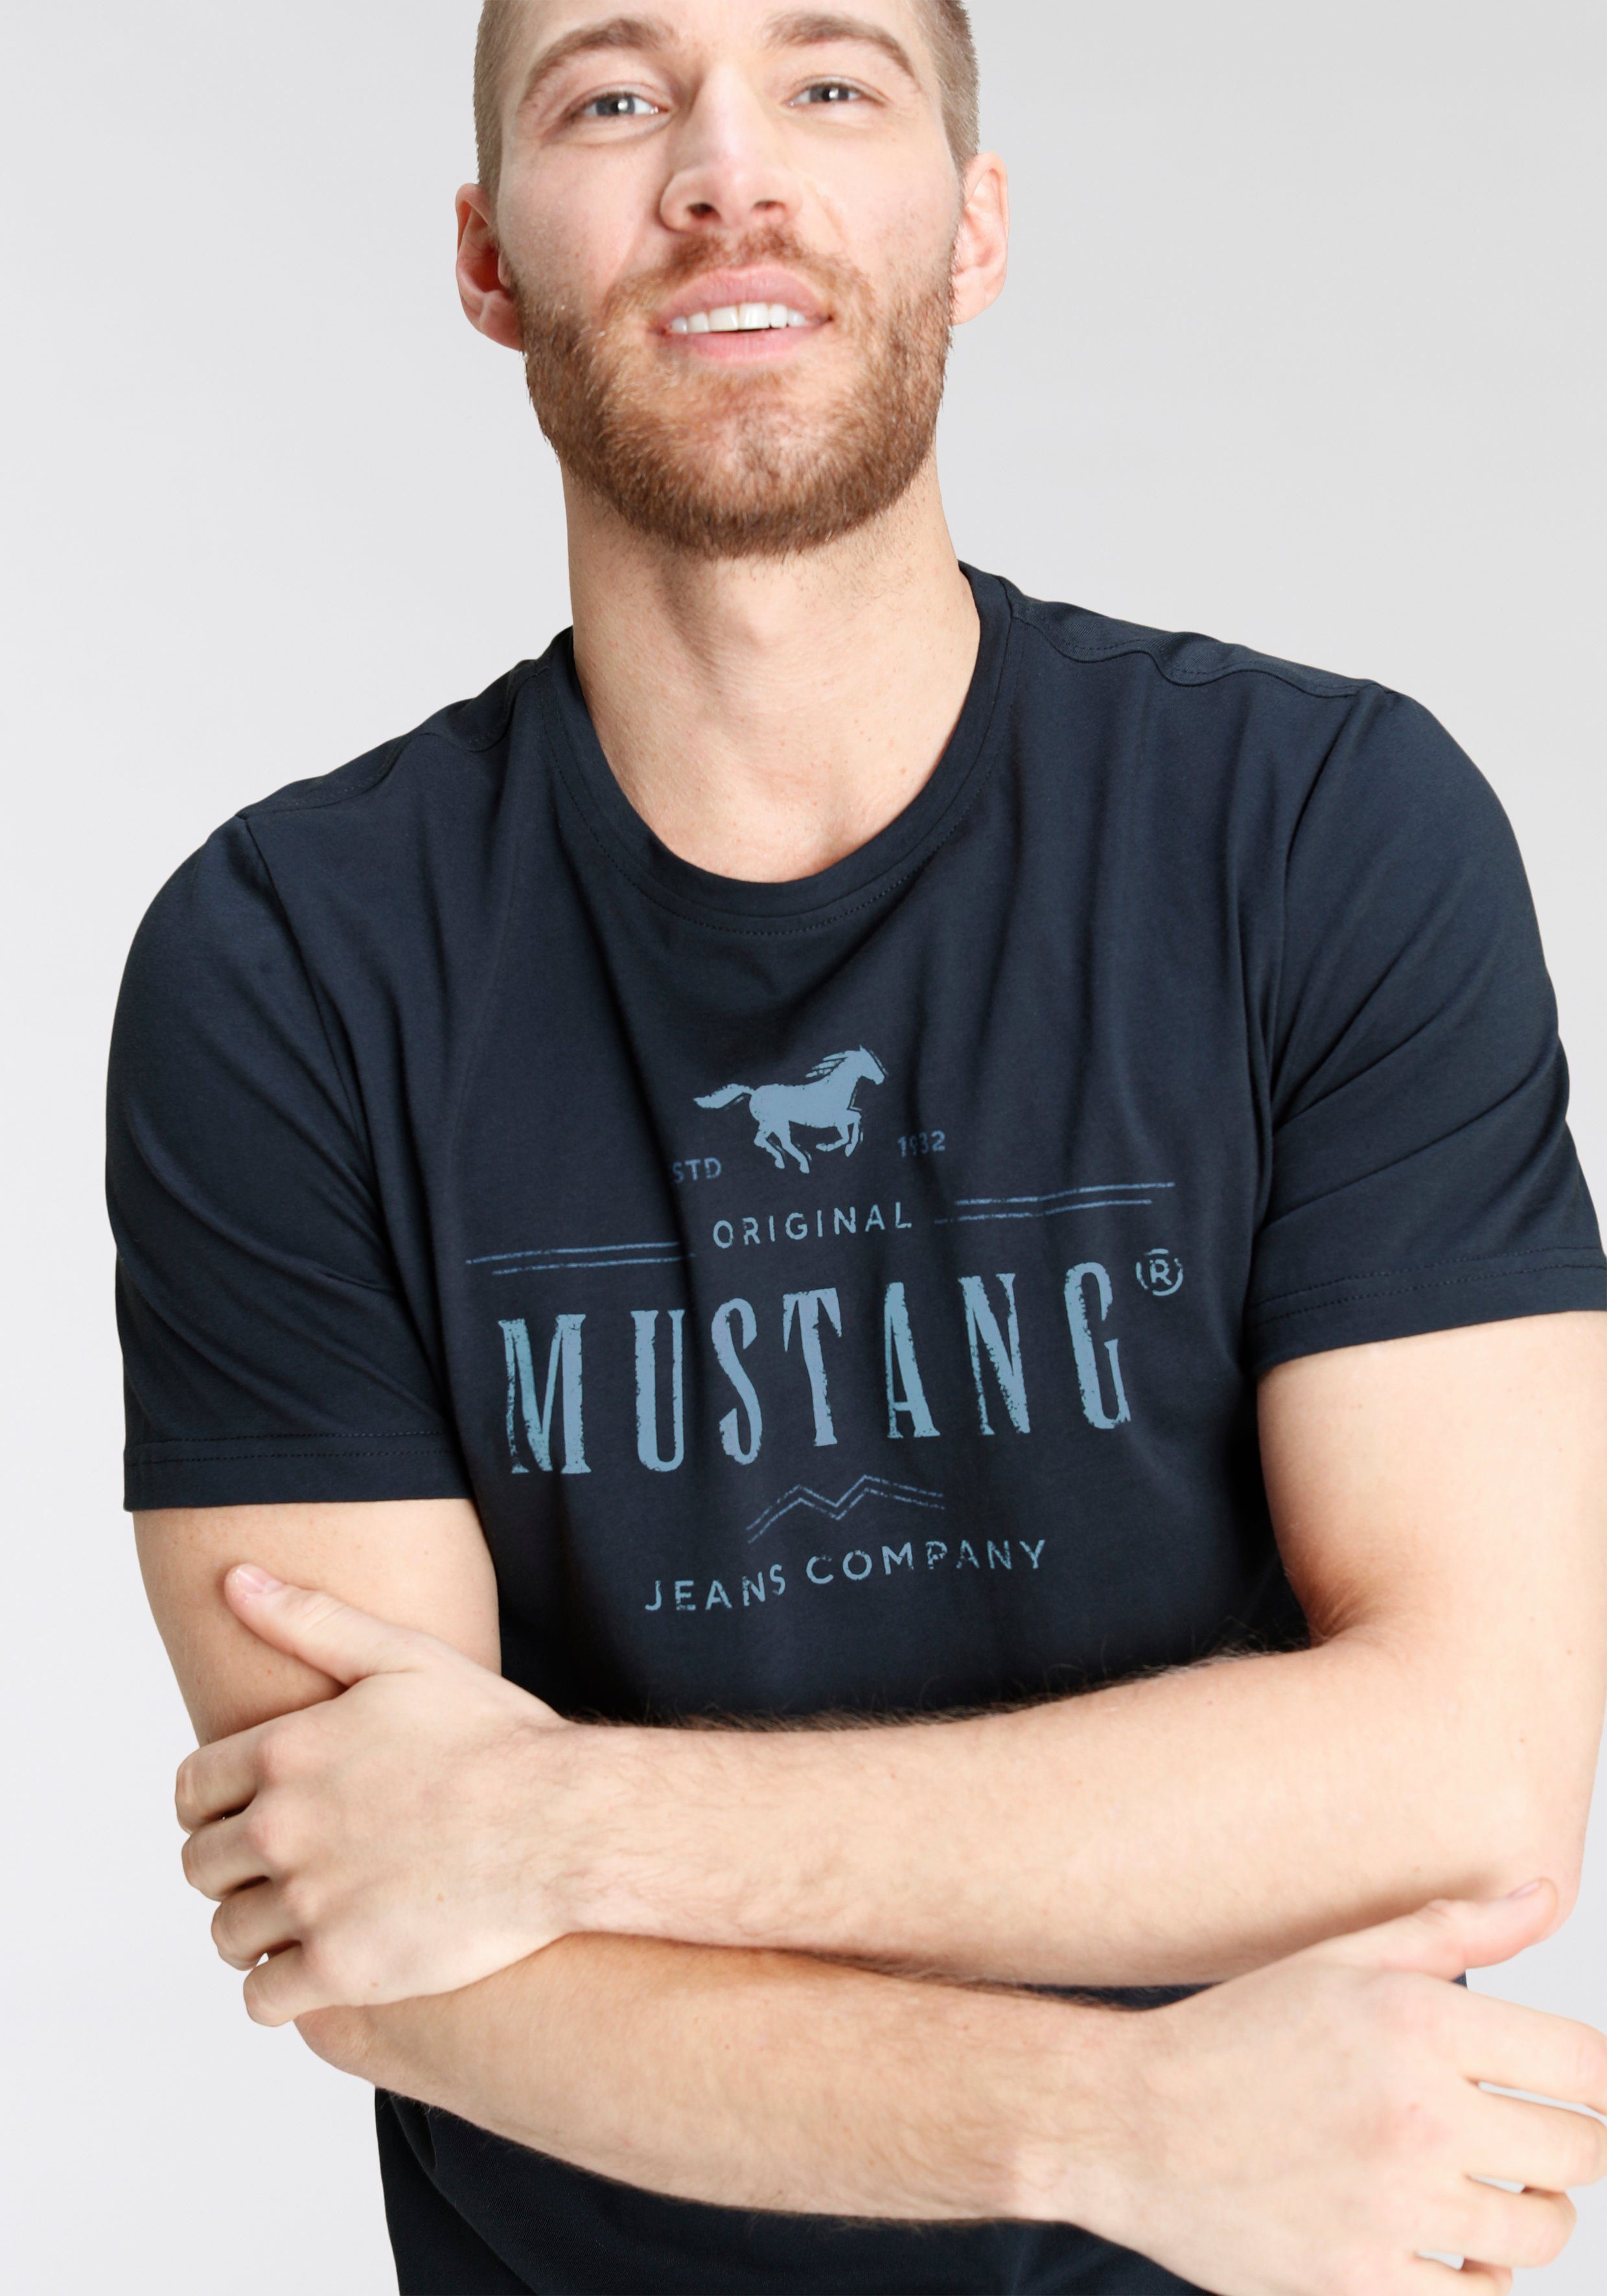 T-Shirt saphire Alex MUSTANG dark